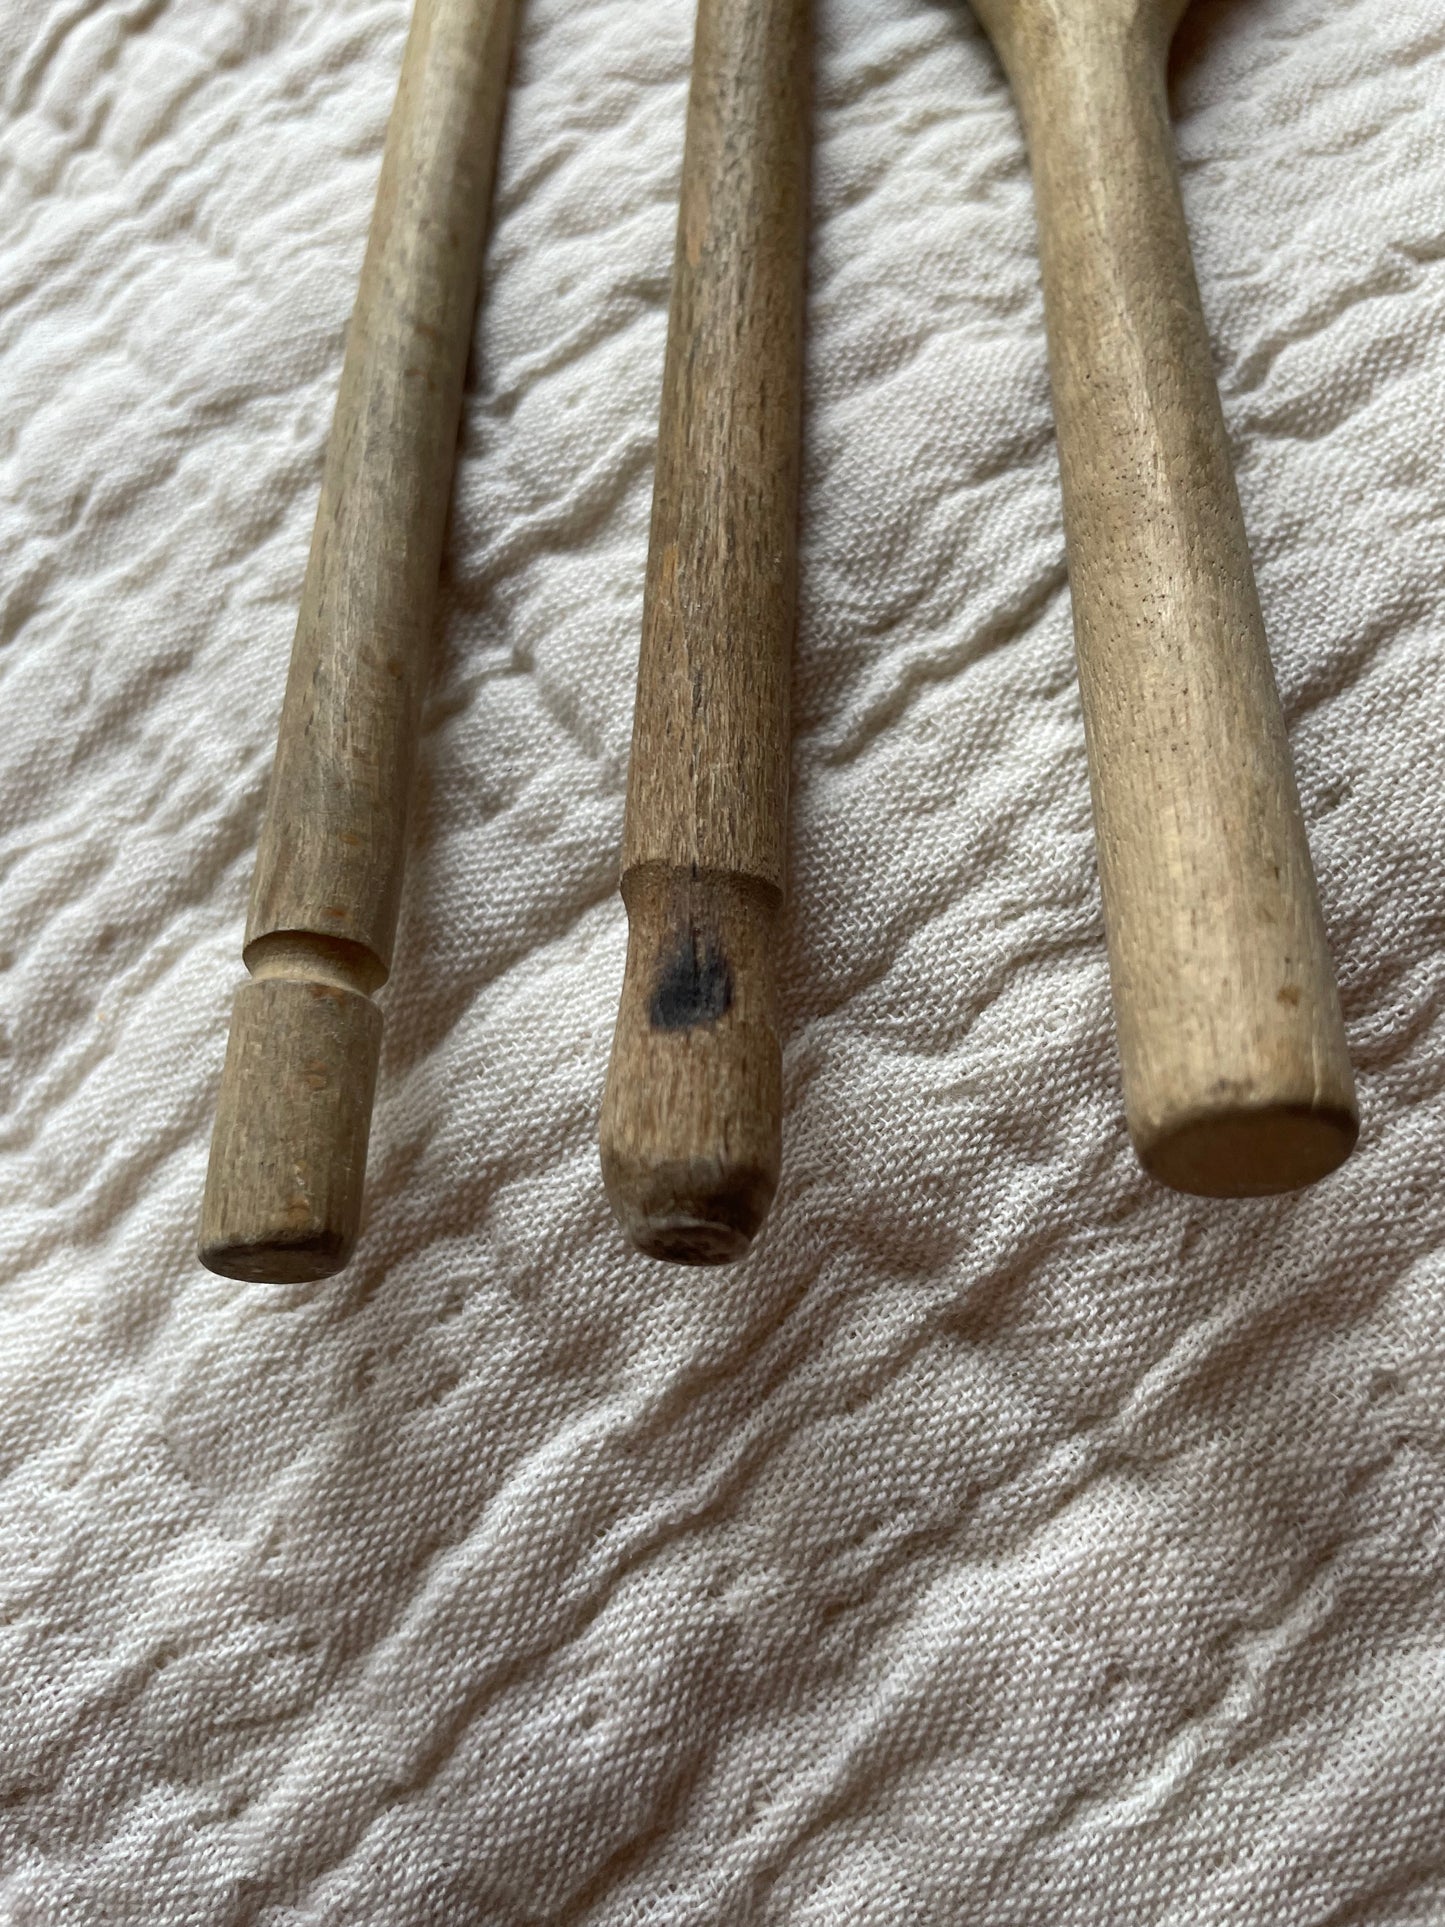 Set of 3 Wood Spoons